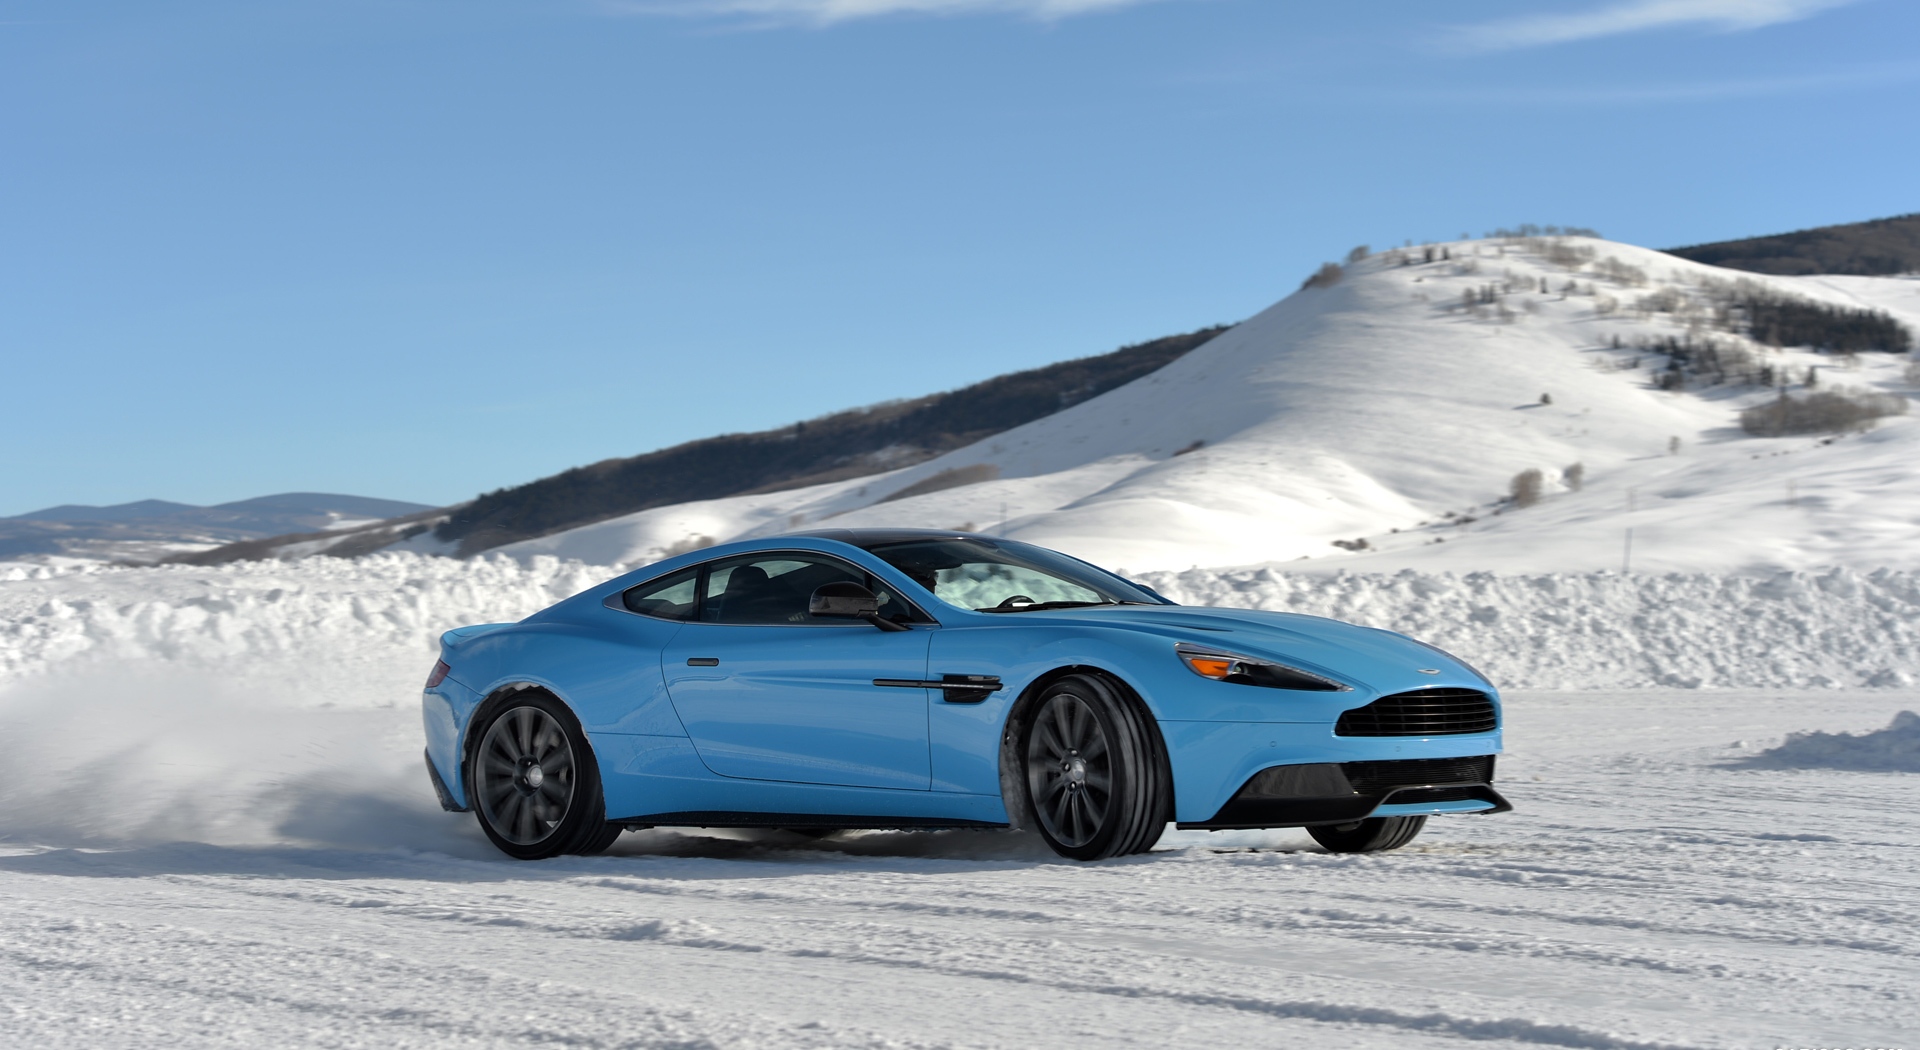 Aston Martin Vanquish image blue A3